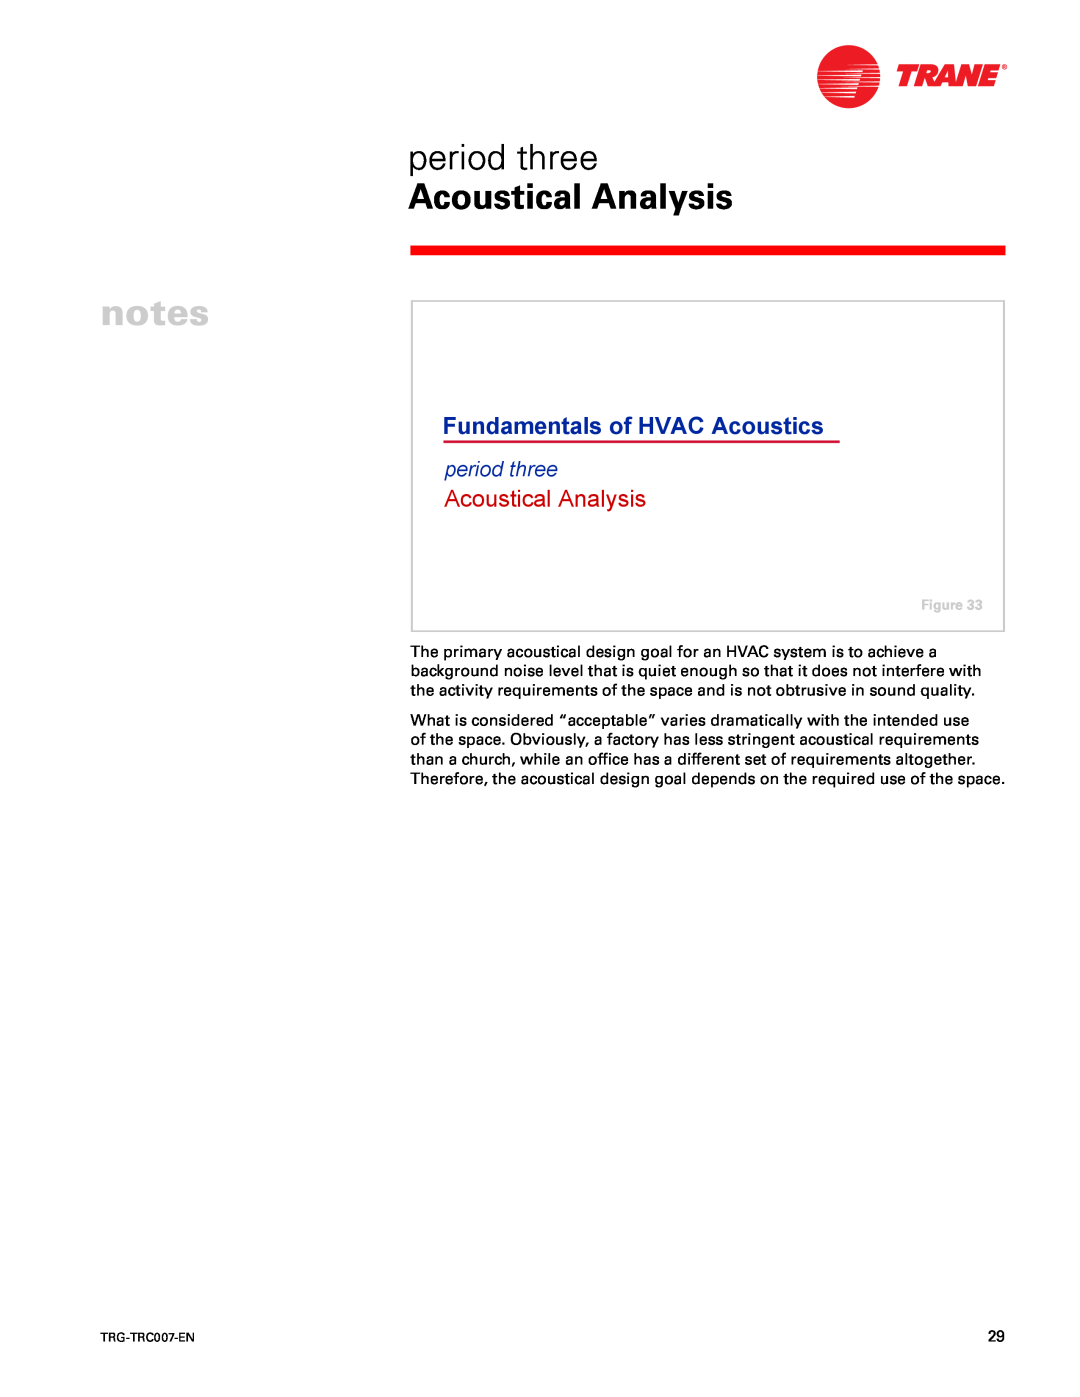 Trane TRG-TRC007-EN manual period three, Acoustical Analysis, Fundamentals of HVAC Acoustics 